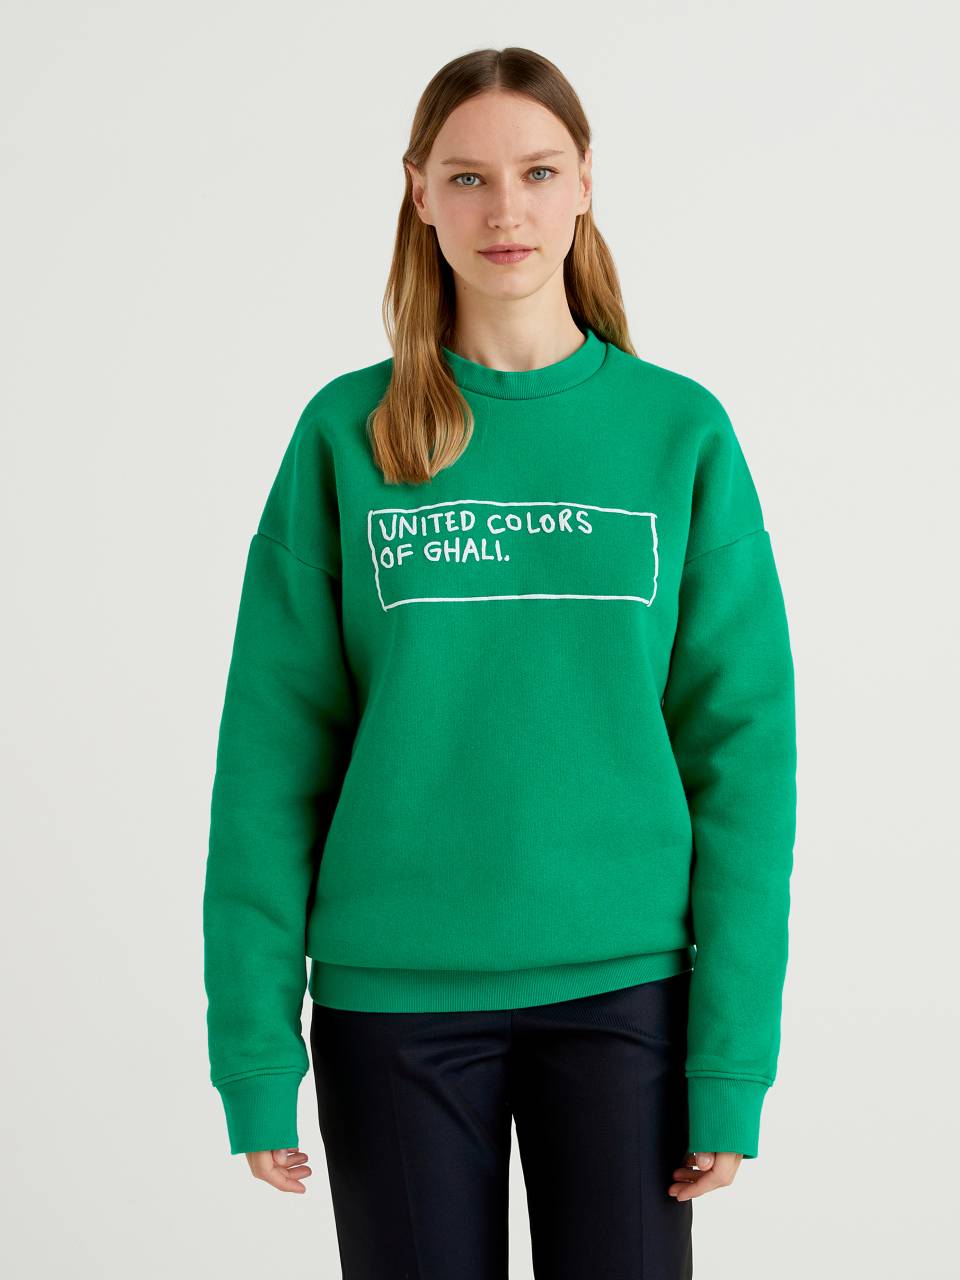 Benetton Green crew neck sweatshirt with print by Ghali. 1